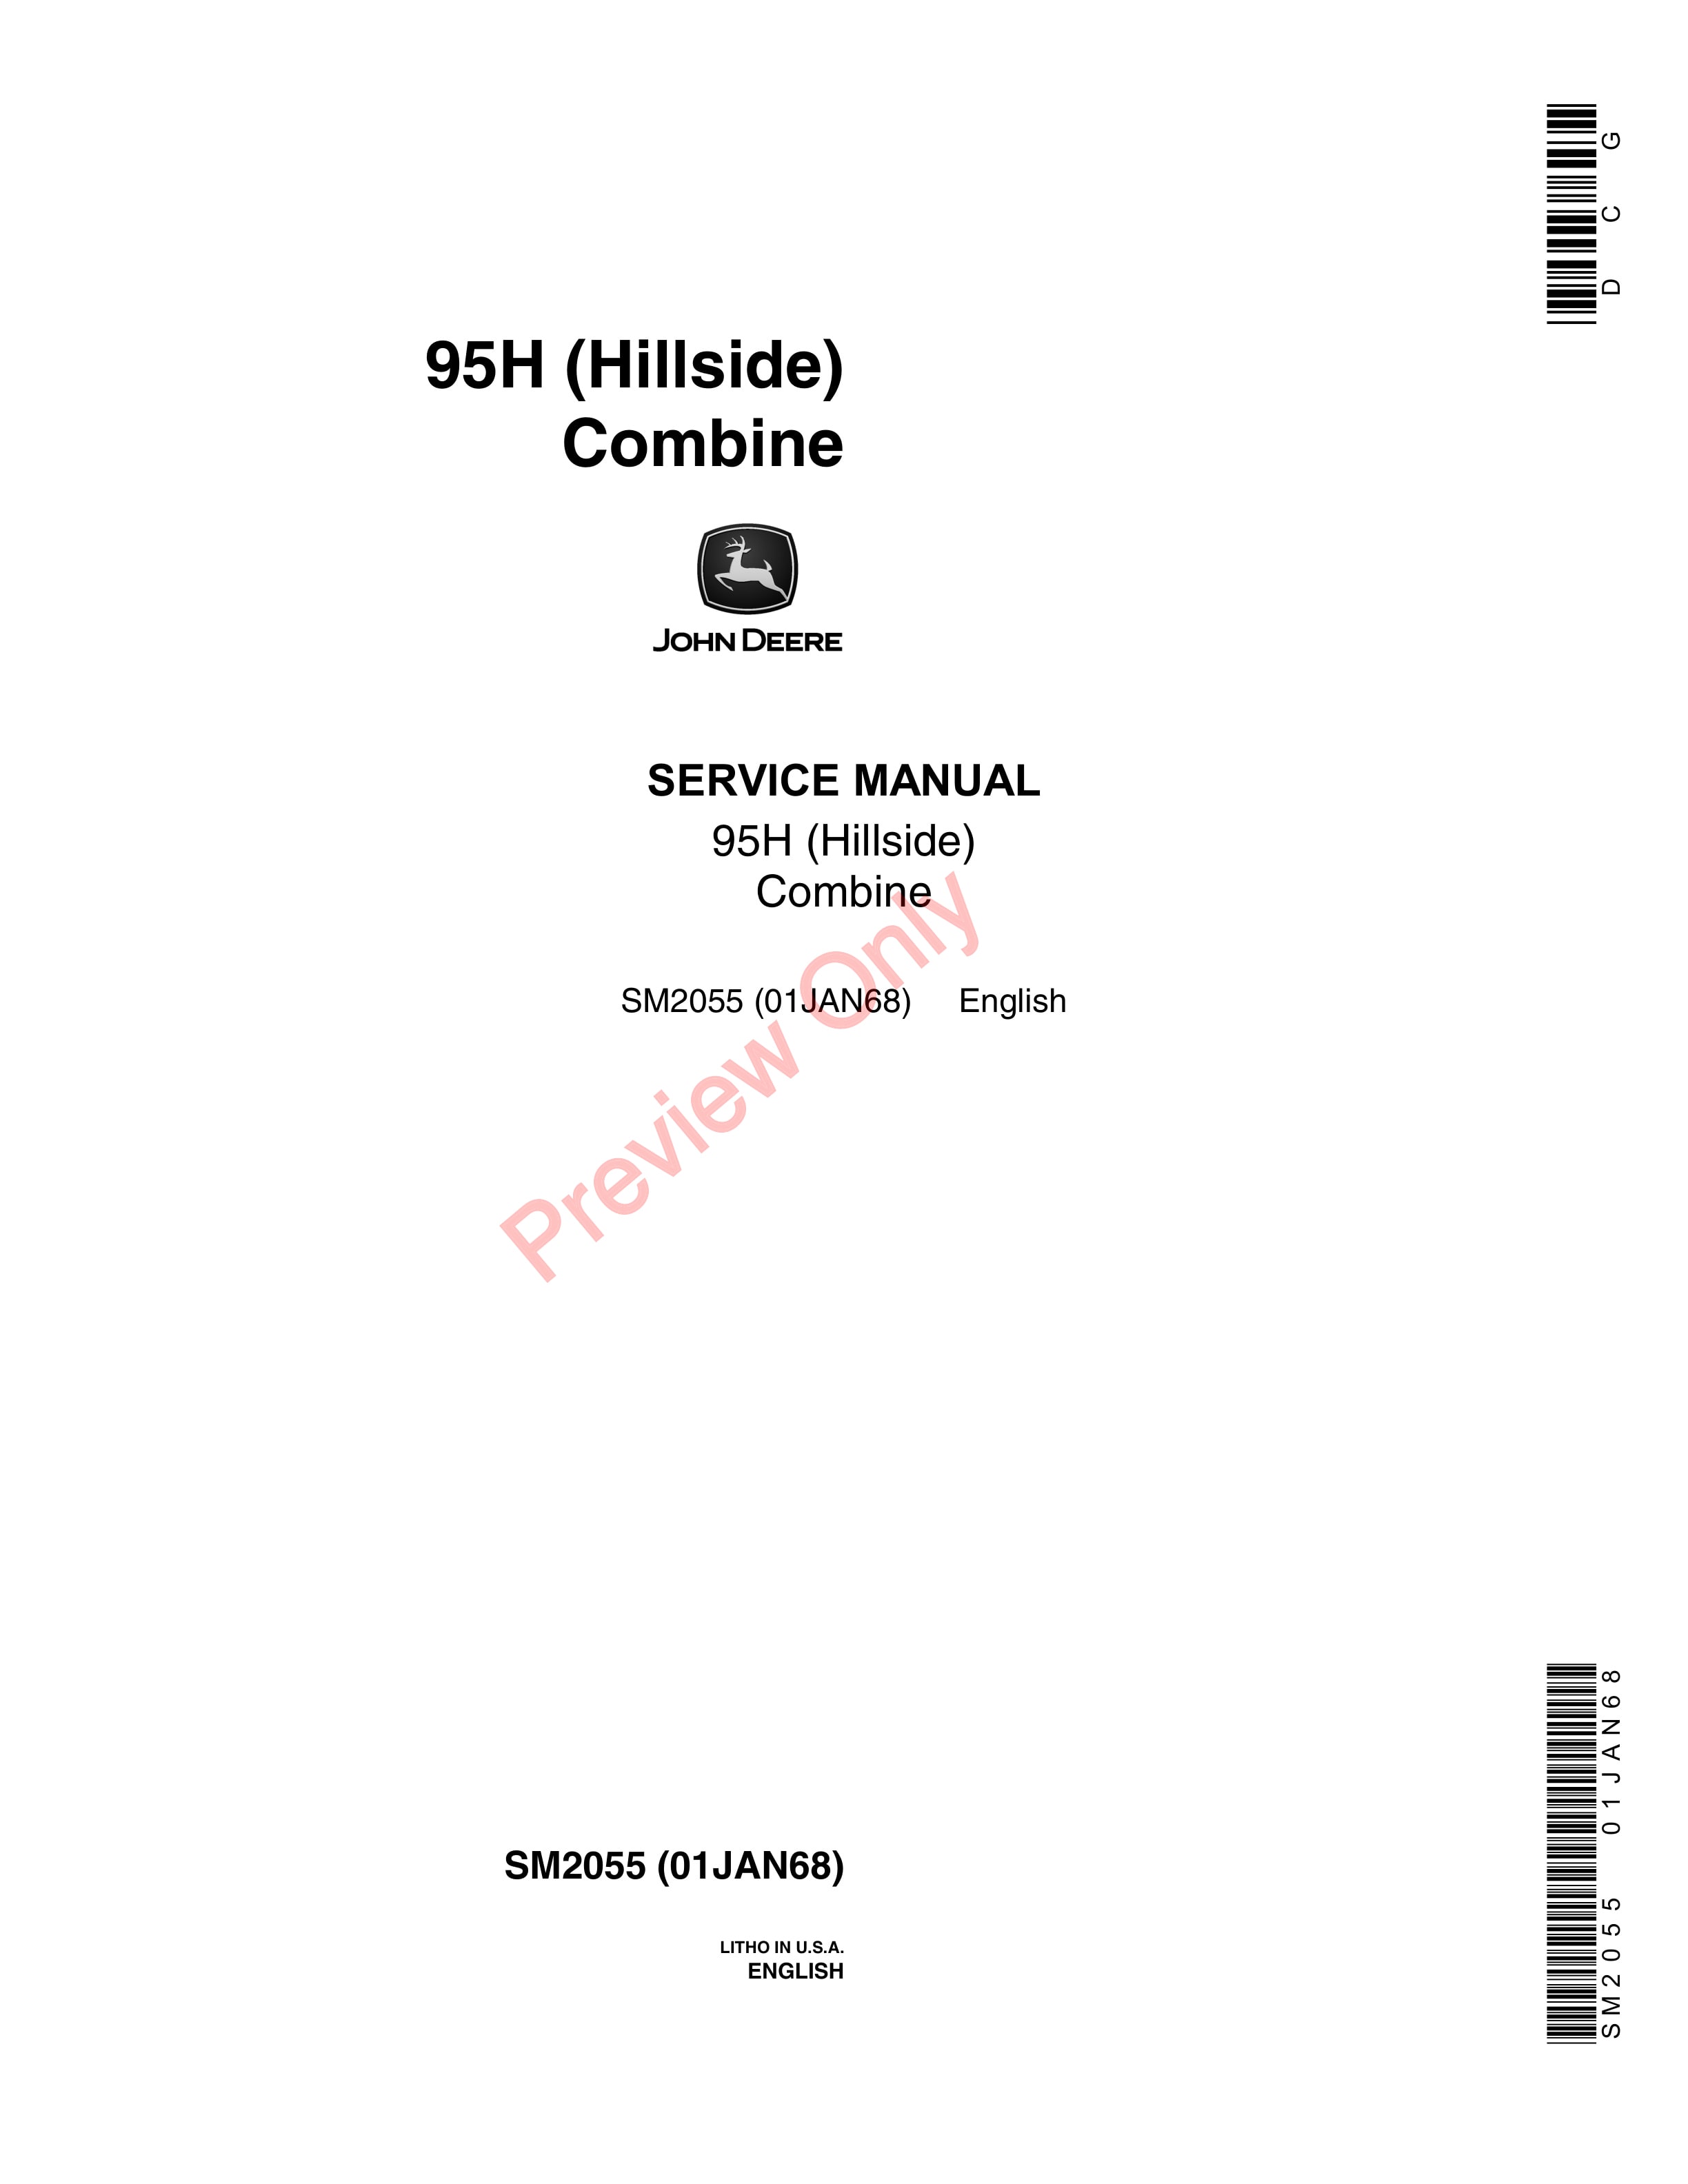 John Deere 95H Hillside Combine Service Manual SM2055 01JAN68-1